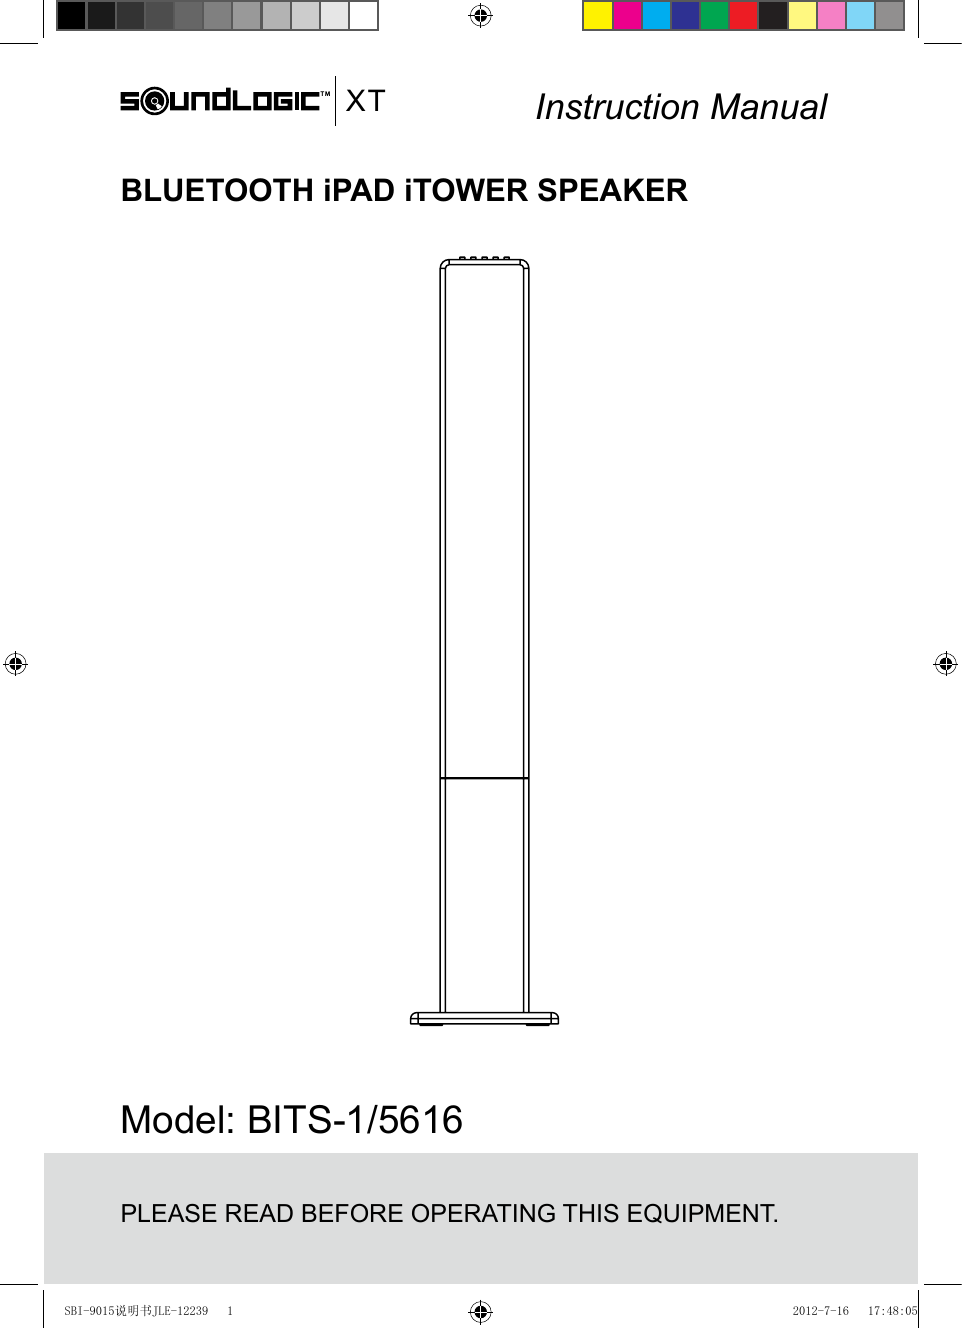 BLUETOOTH iPAD iTOWER SPEAKERInstruction ManualModel: BITS-1/5616PLEASE READ BEFORE OPERATING THIS EQUIPMENT.TM XTSBI-9015说明书JLE-12239   1 2012-7-16   17:48:05